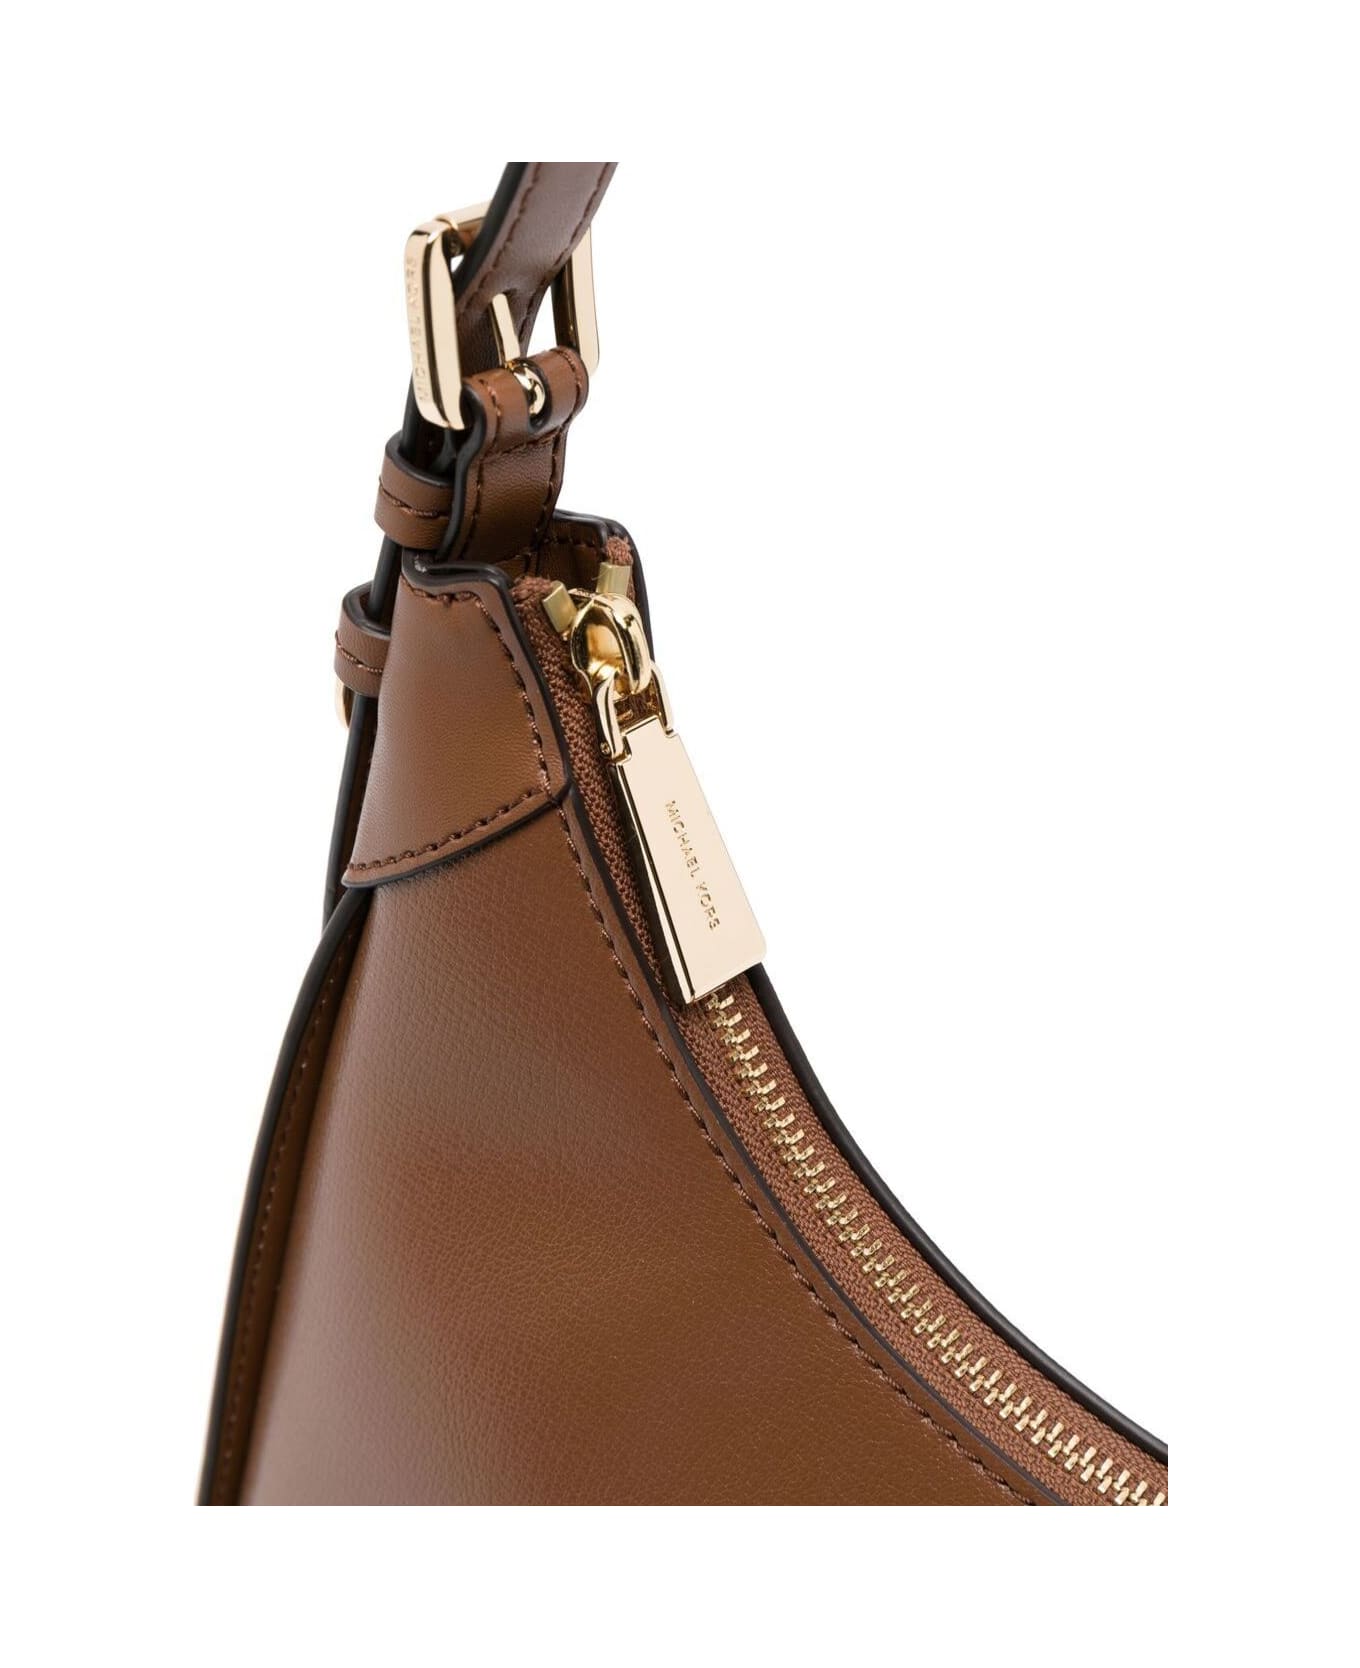 MICHAEL Michael Kors Brown Wilma Shoulder Bag In Leather Woman - Brown